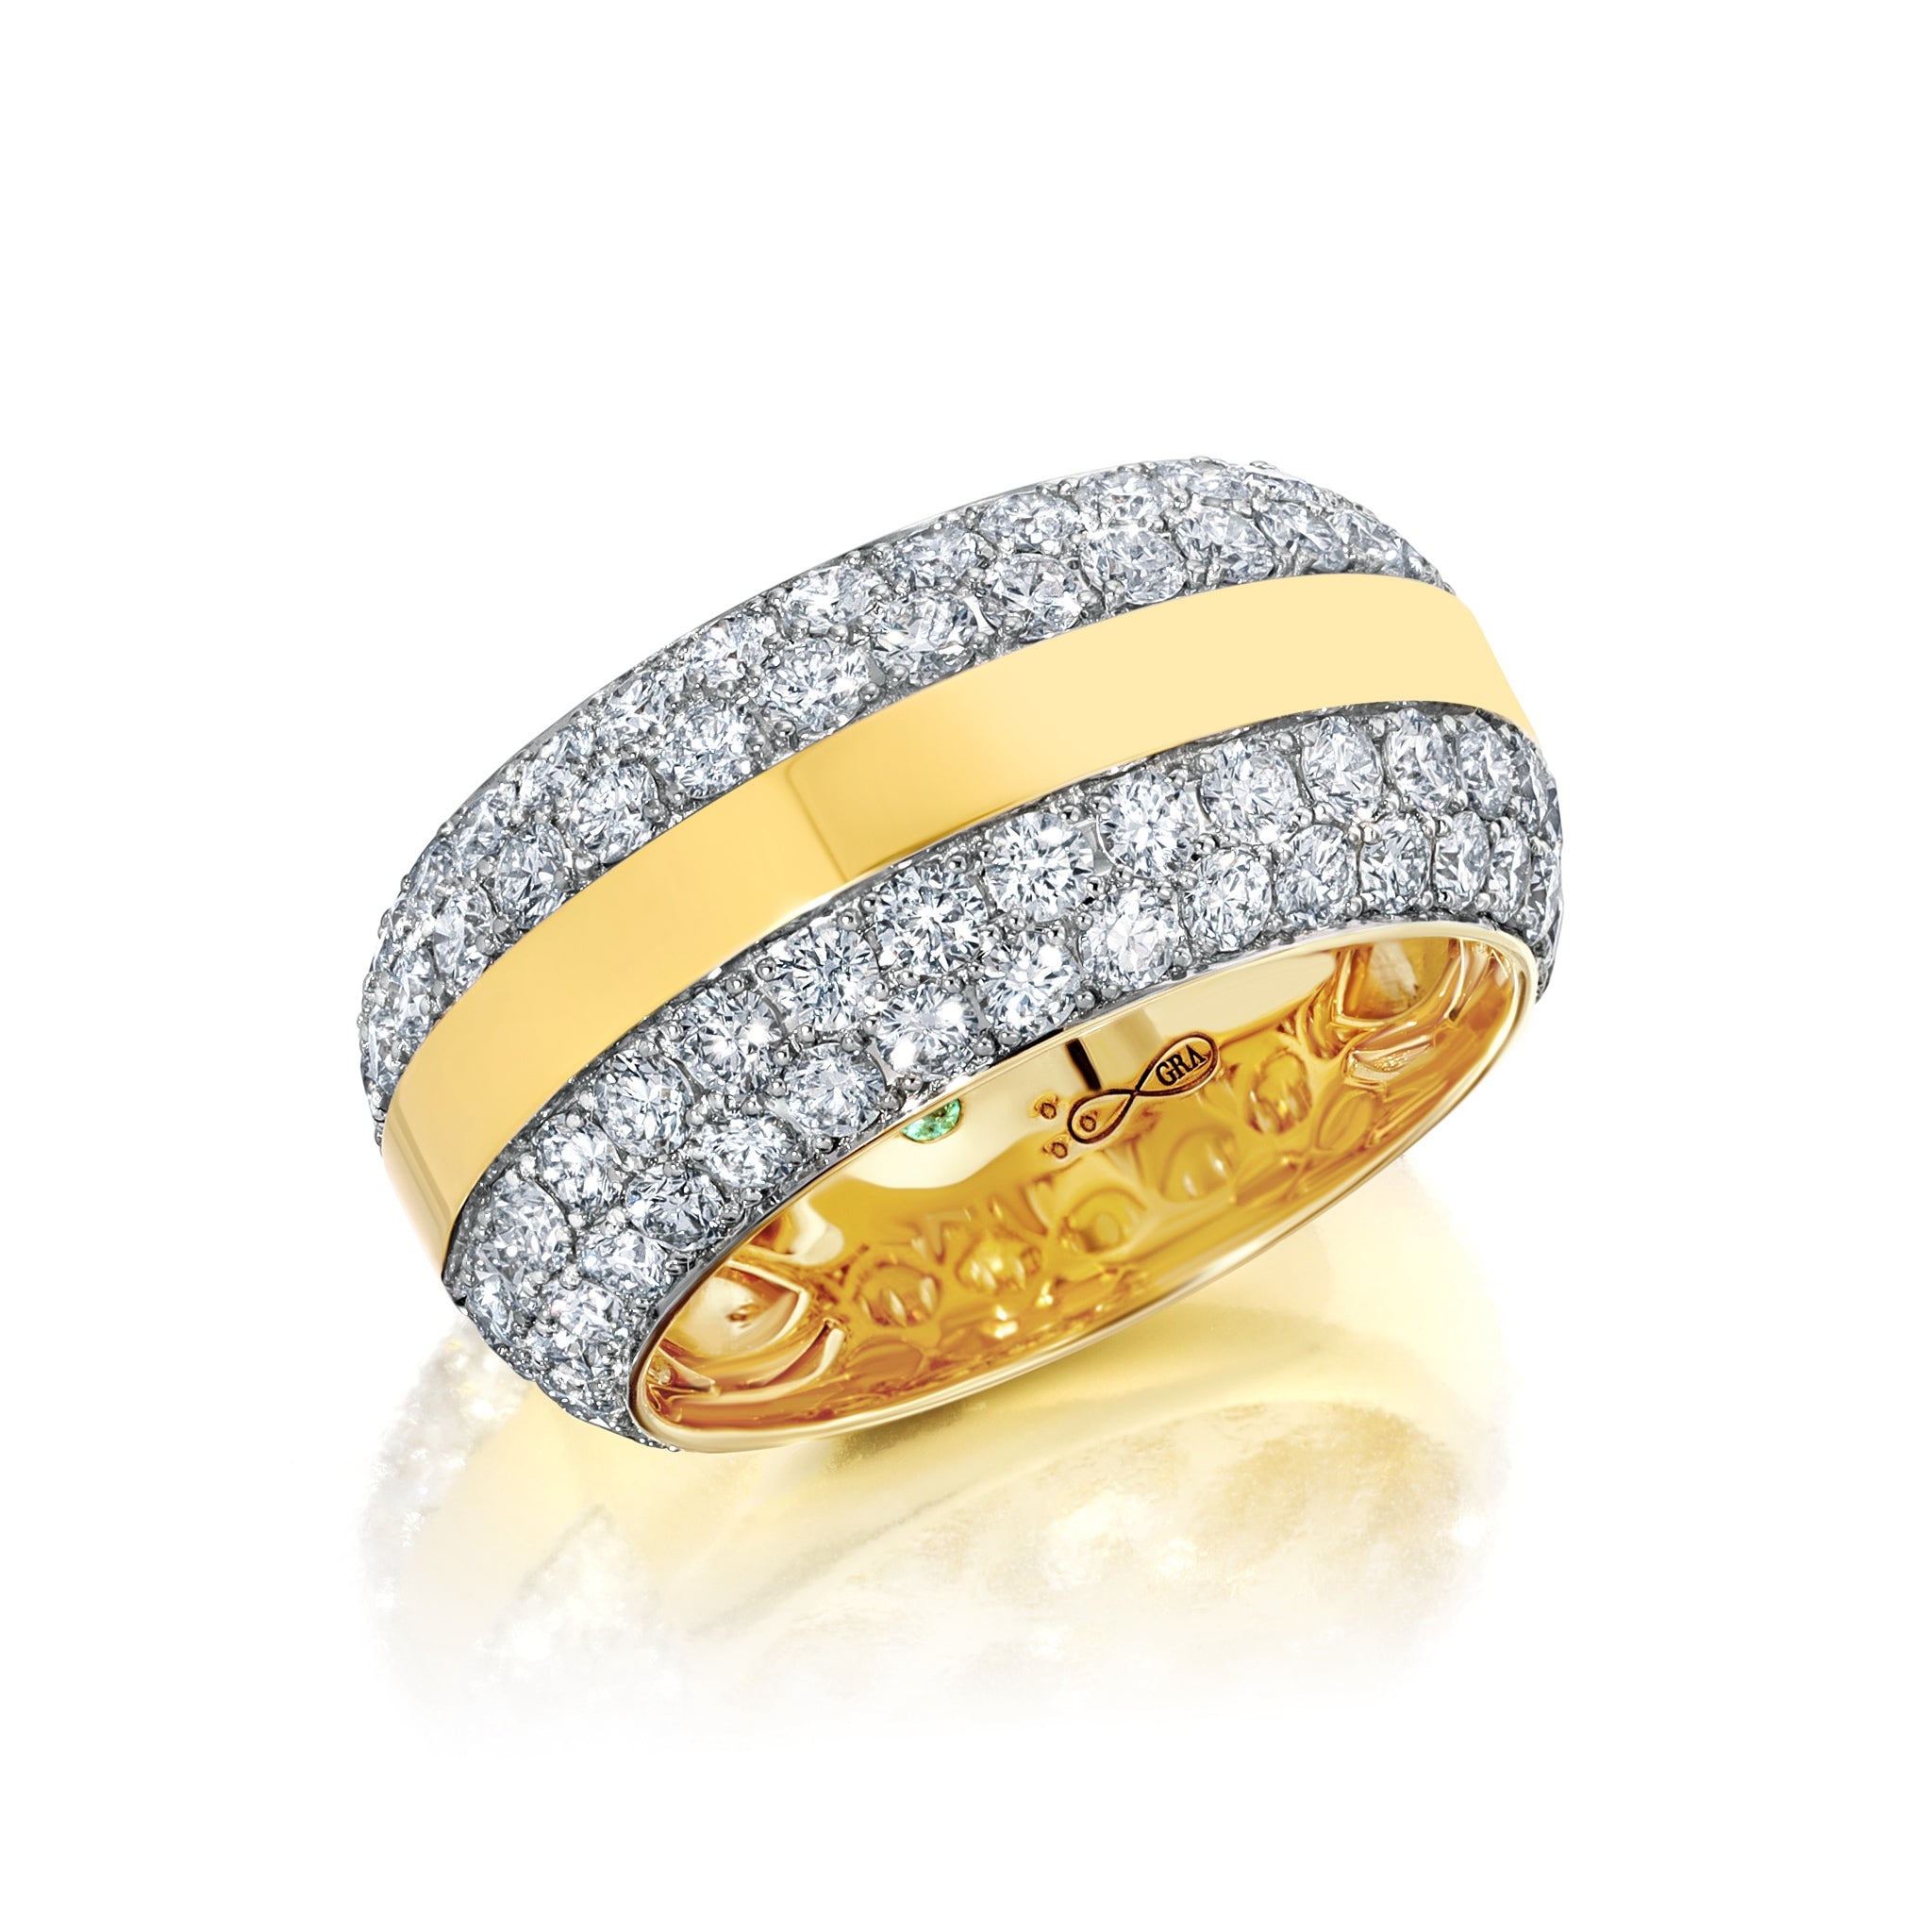 Ouro Diamond Band Ring